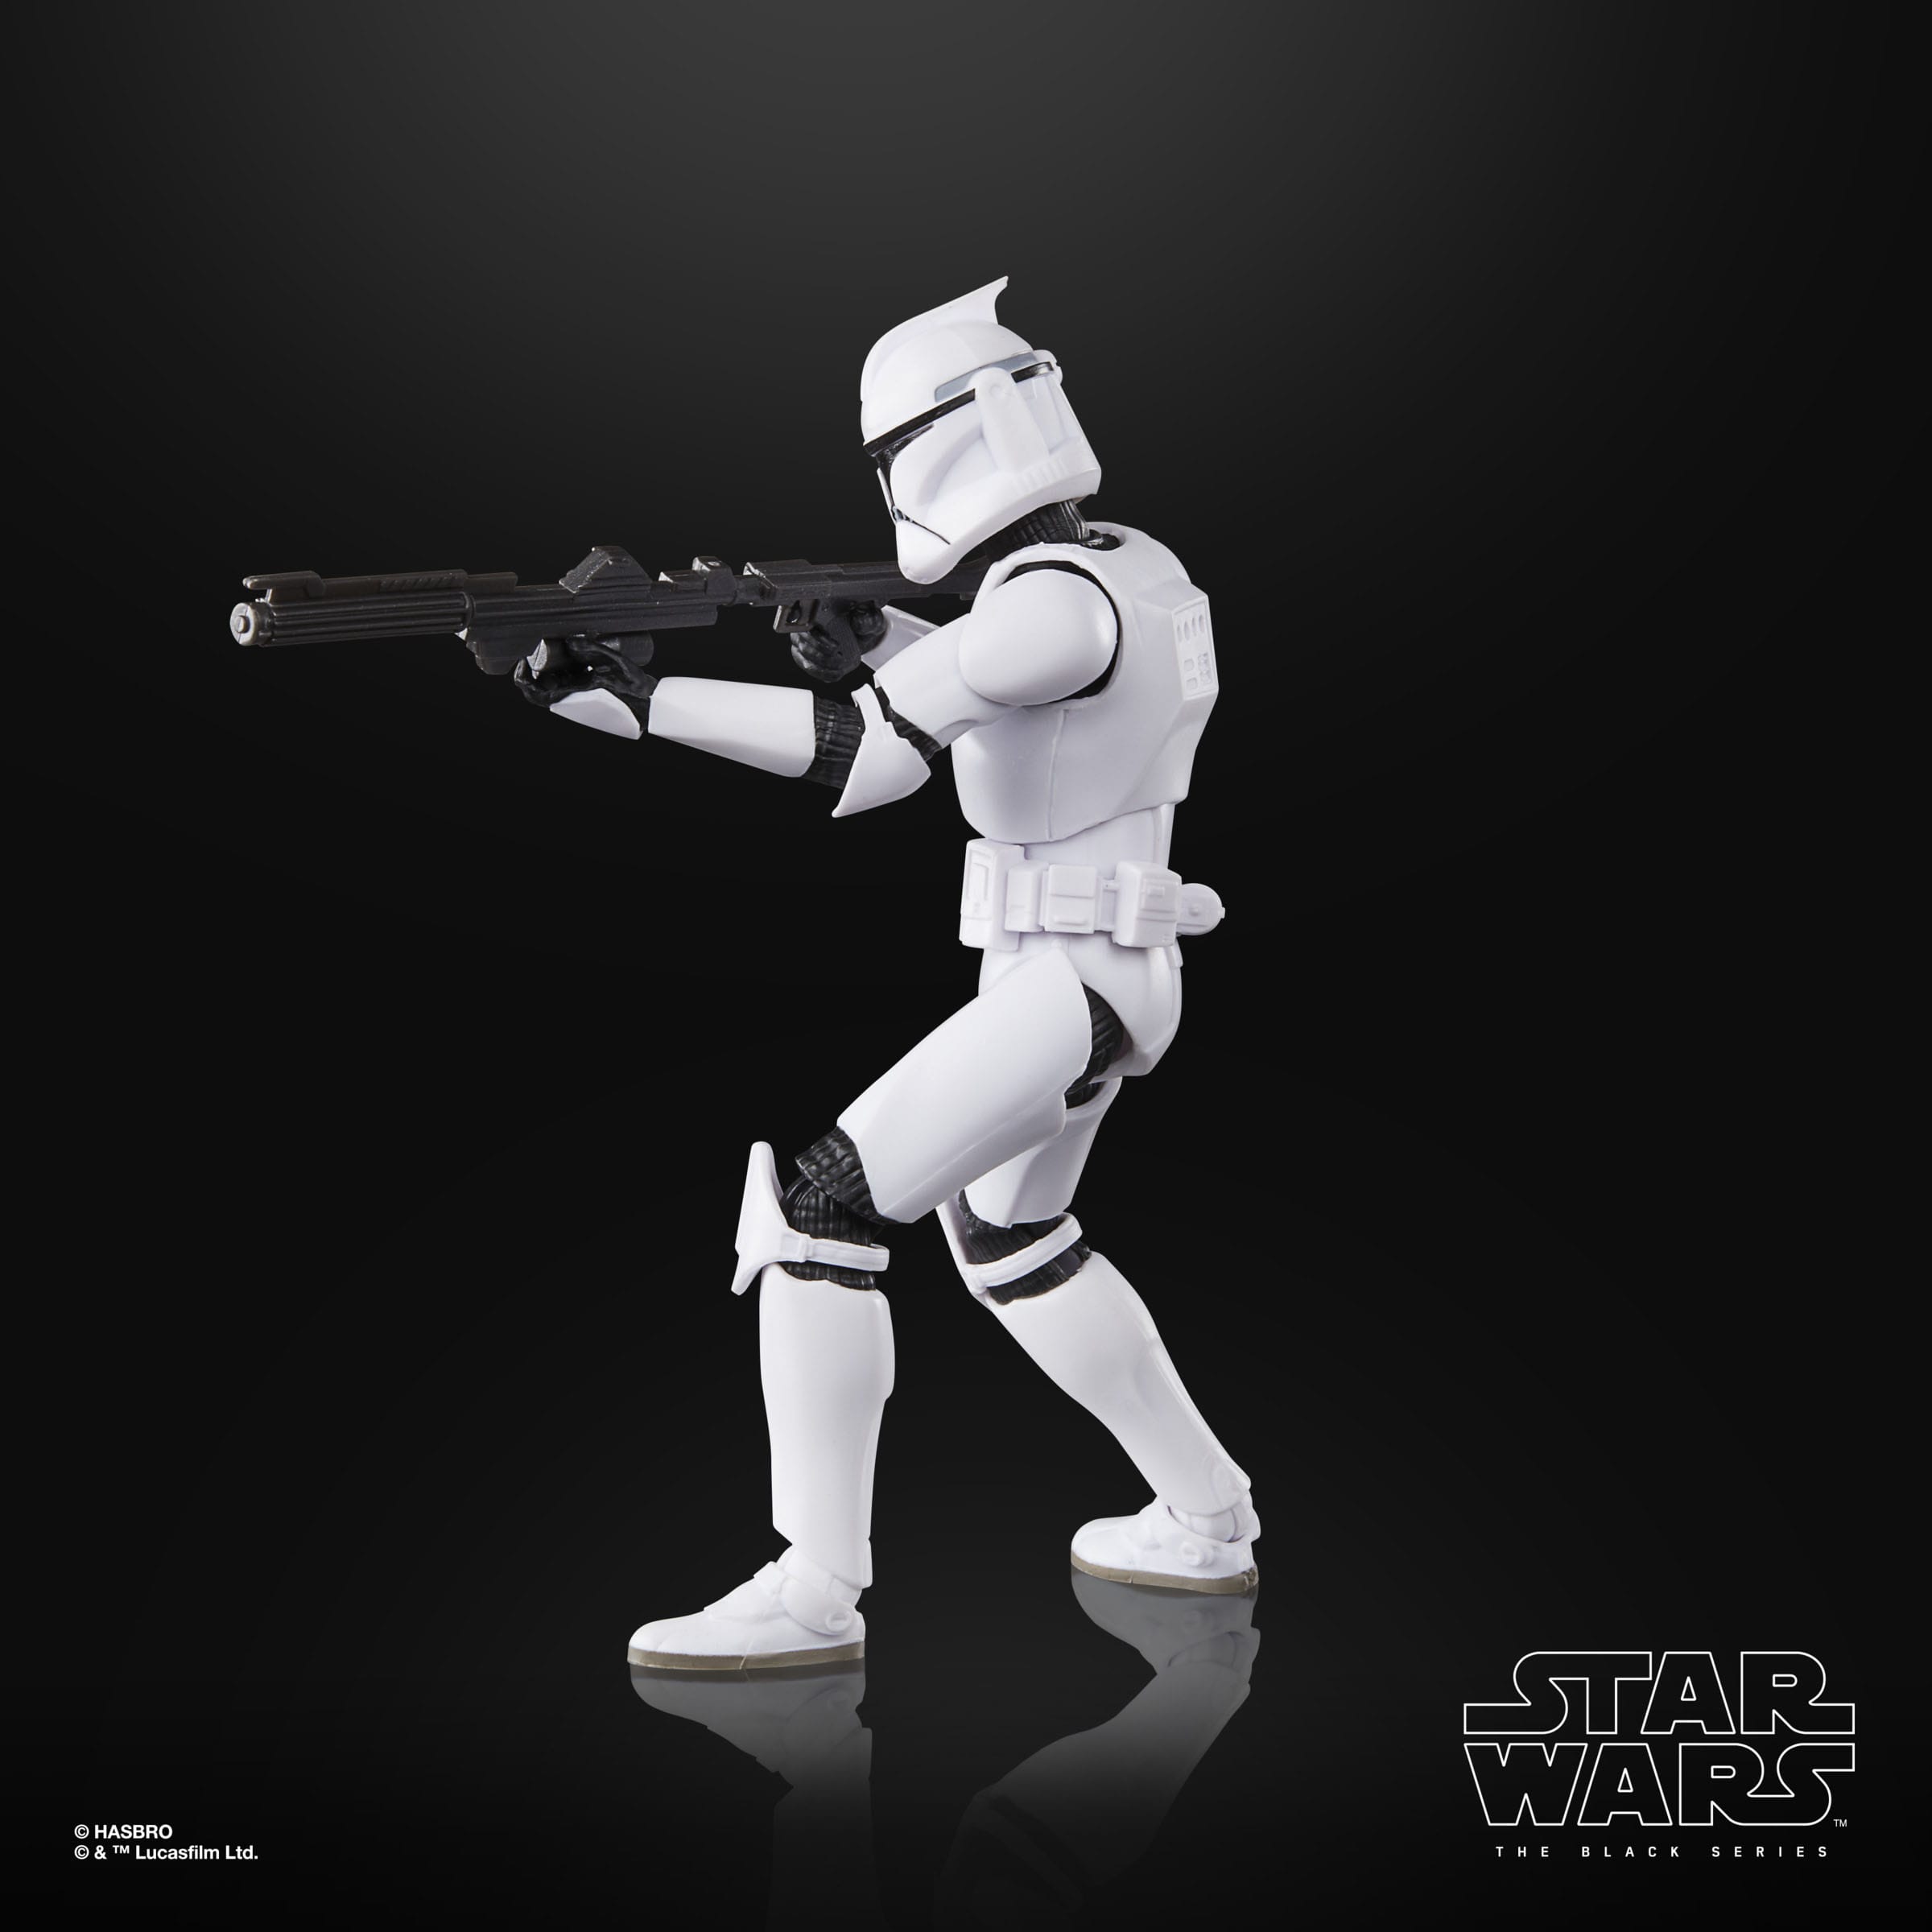 Star Wars Episode II Black Series Actionfigur Phase I Clone Trooper 15 cm HASG0022 5010996227478